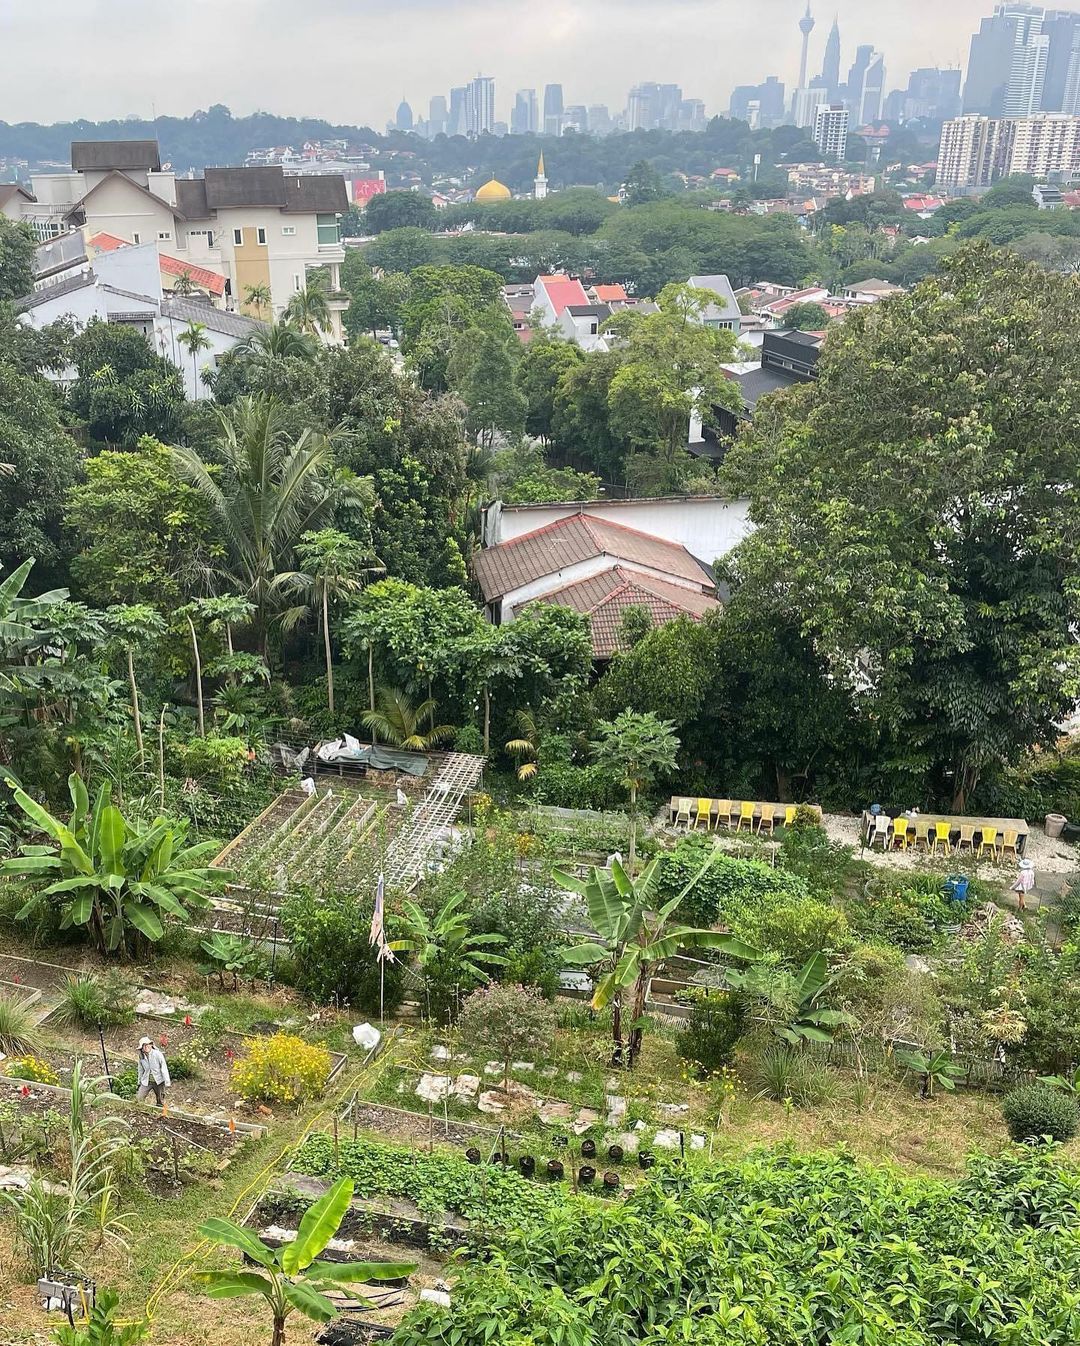 The farm was founded by architect Ng Sek San in 2016. Image credit: kebunkebunbangsar